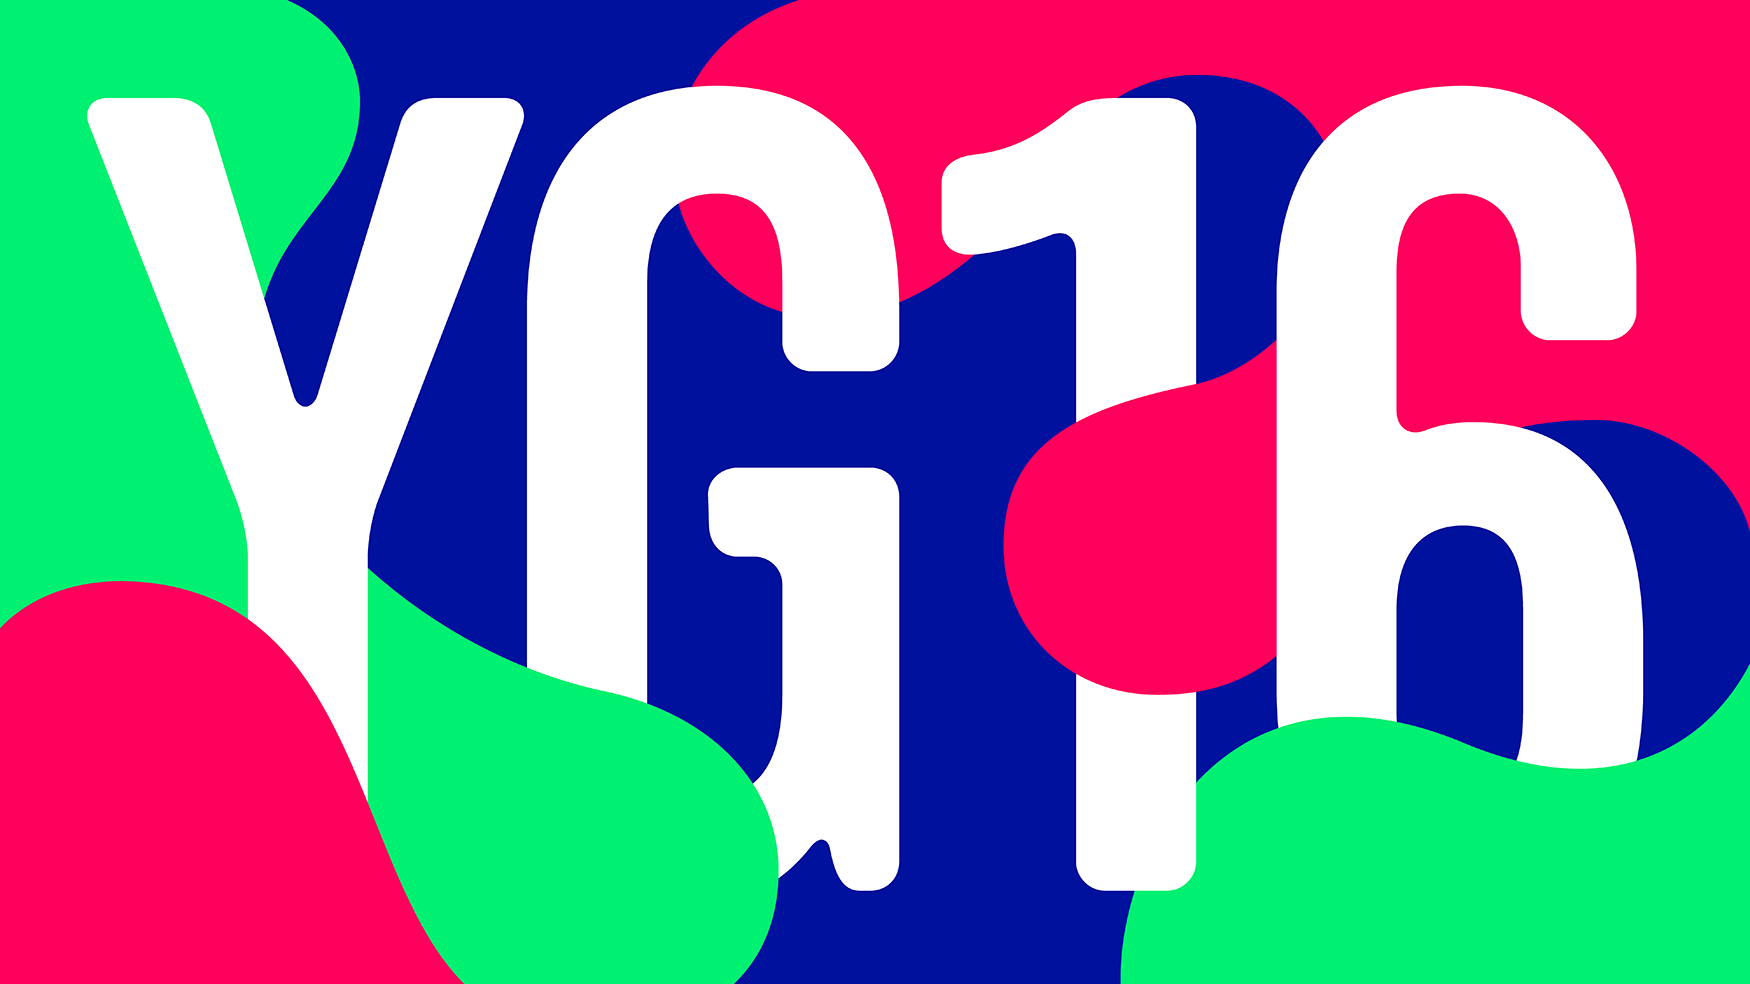 YG_1